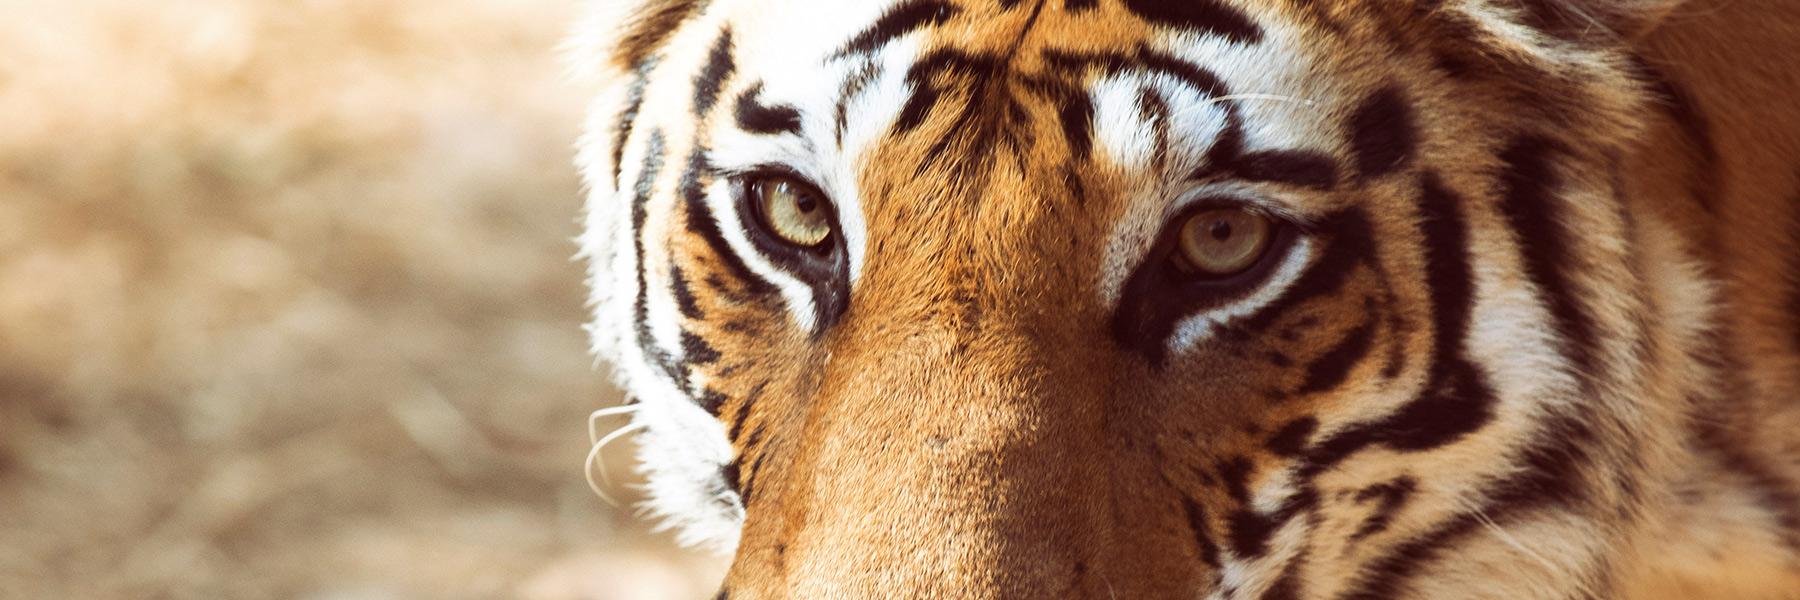 Tigers & Wildlife In India